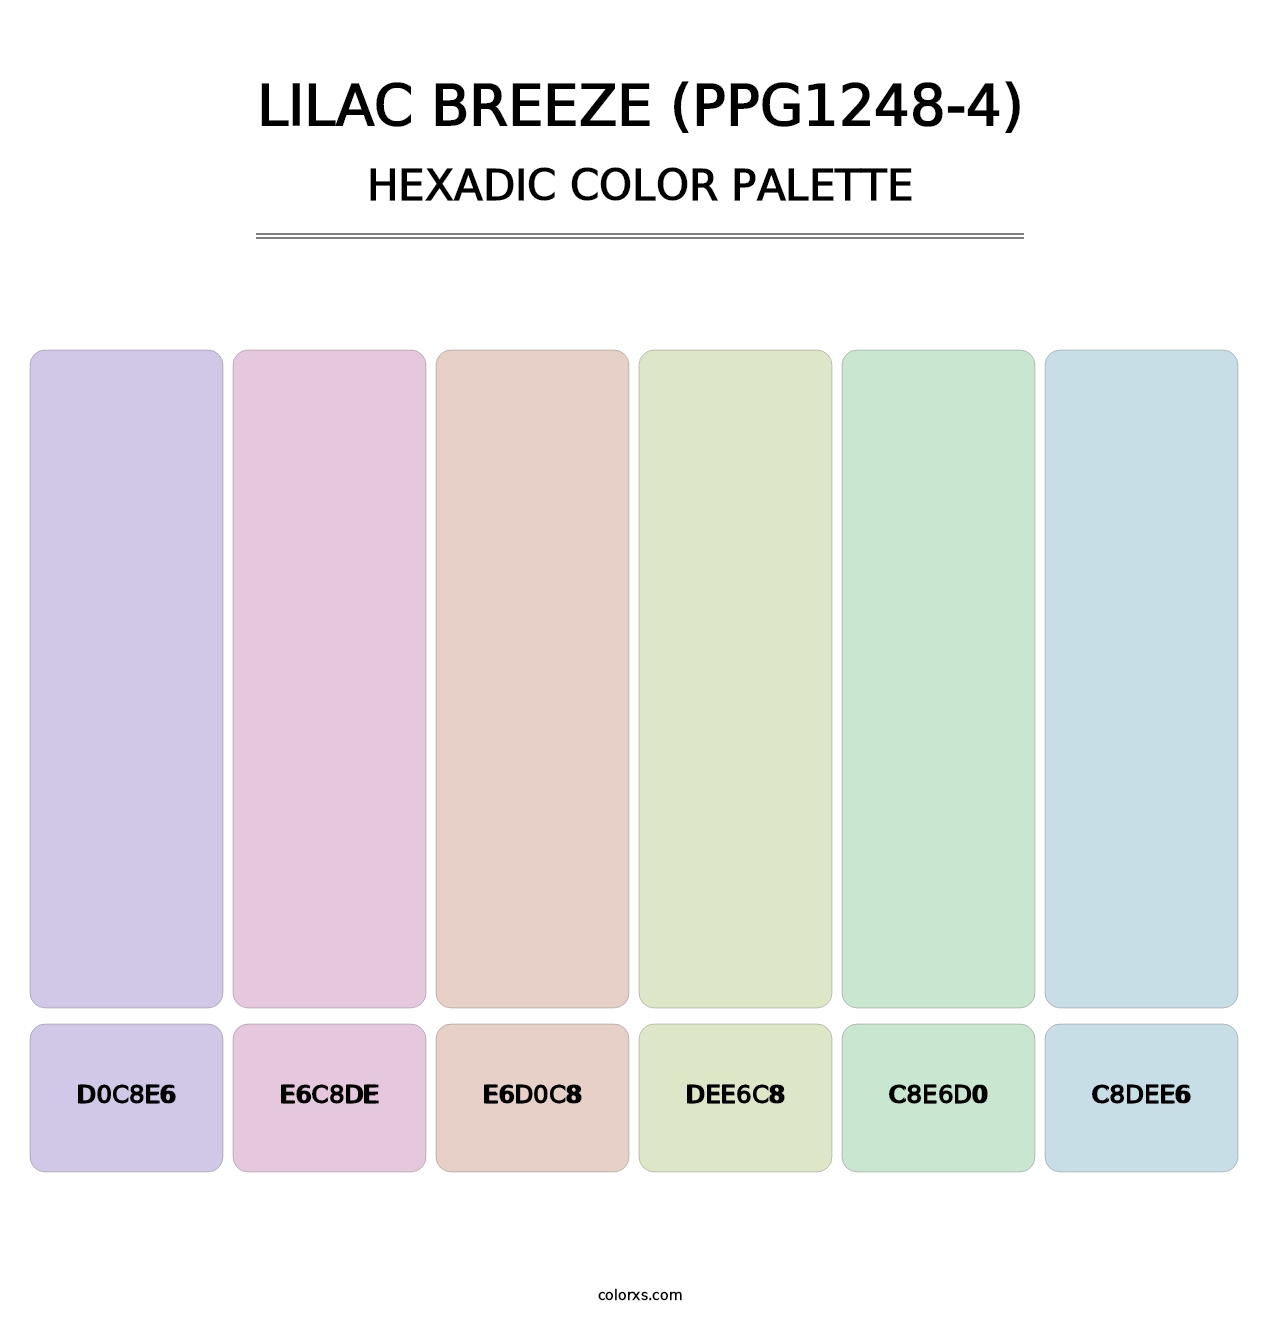 Lilac Breeze (PPG1248-4) - Hexadic Color Palette